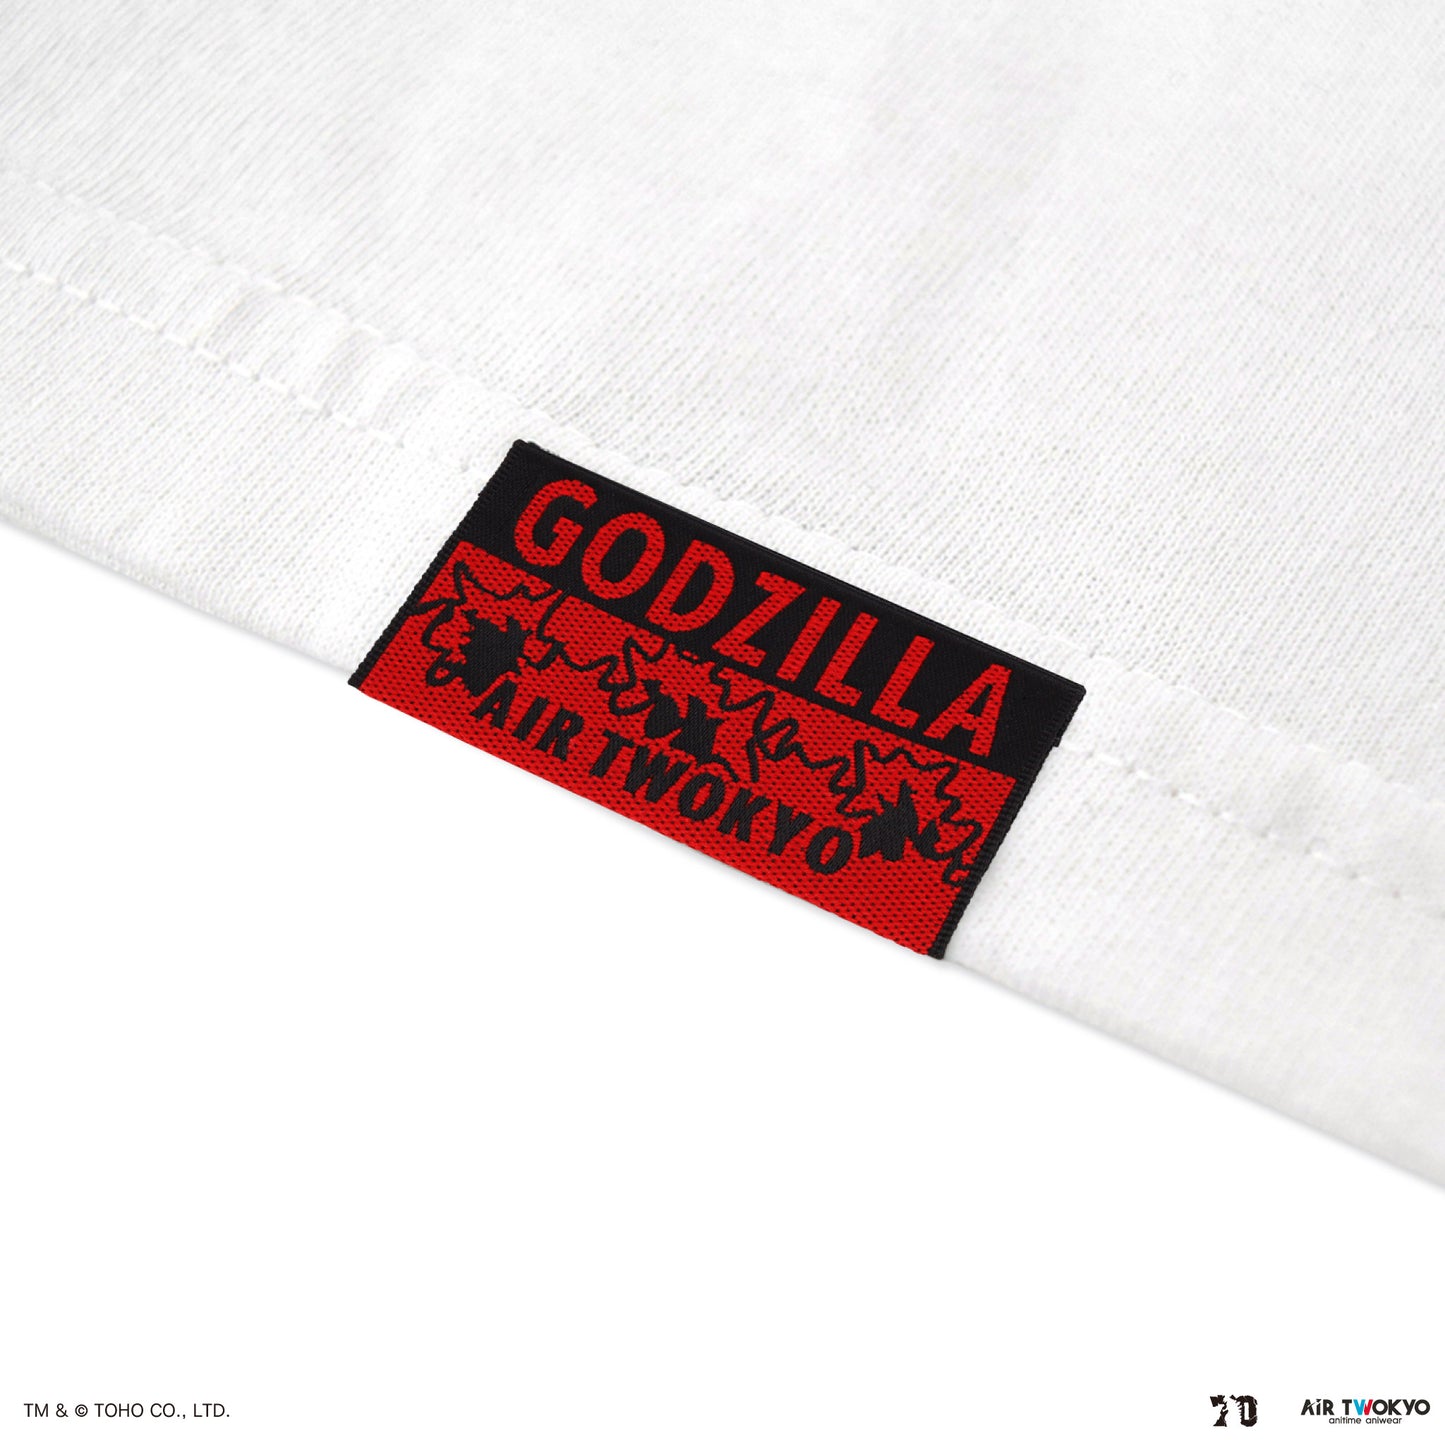 GODZILLA 70th Anniversary "GODZILLA MINUS ONE" Scene Illustration T-shirt2(Shinseimaru)